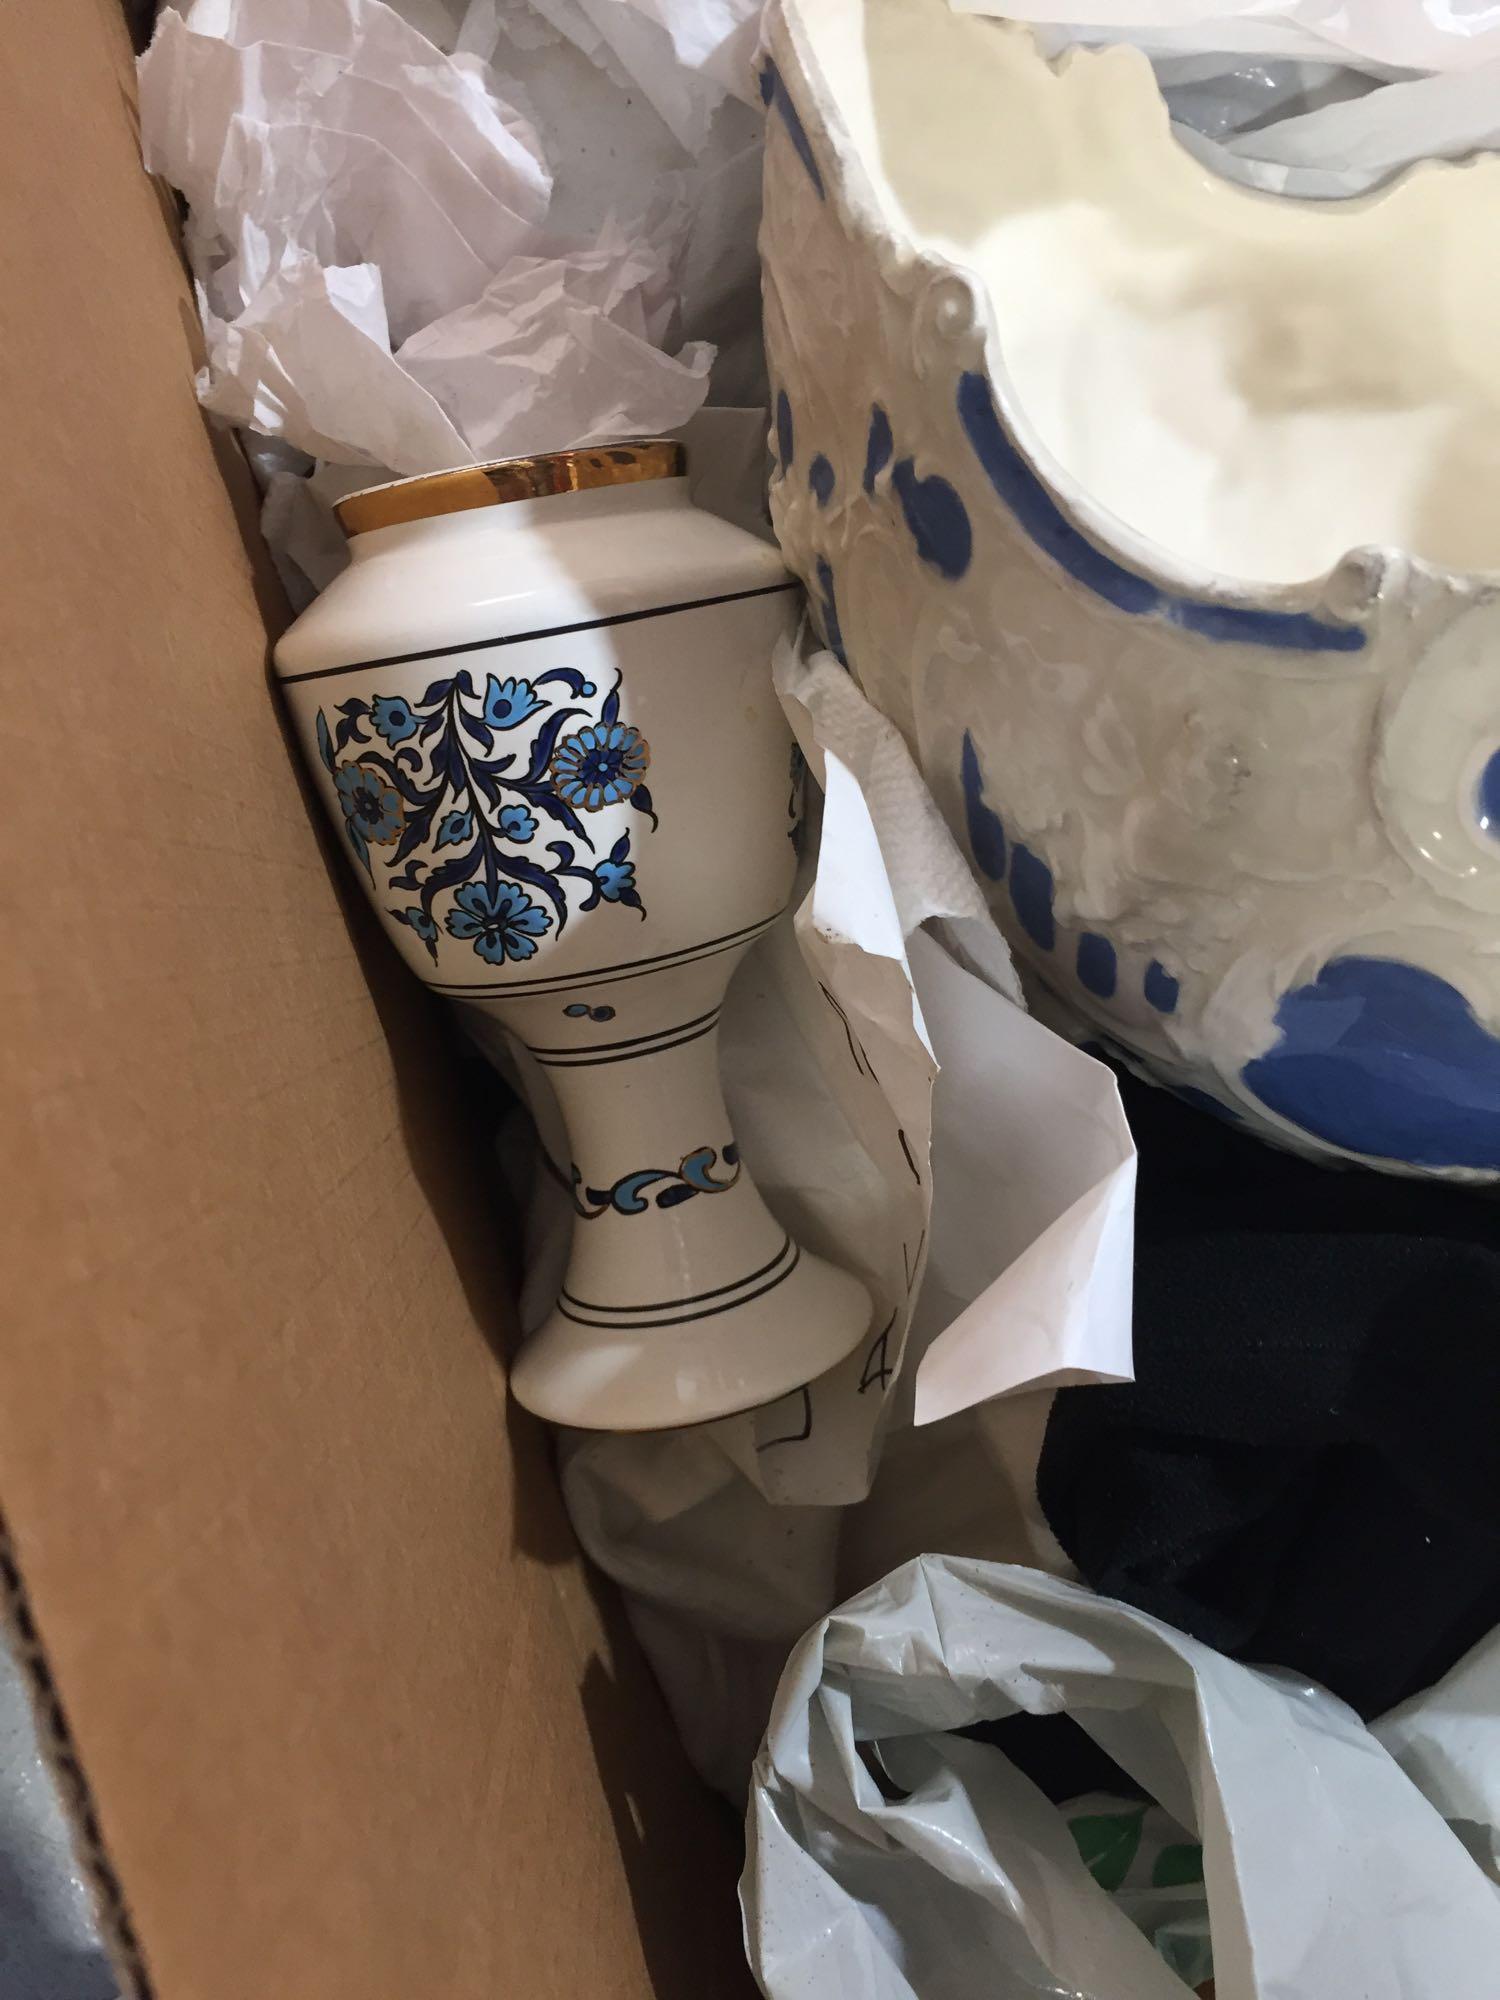 Box of miscellaneous ceramics, pots, figurines, etc - Quality & quantity of contents unknown